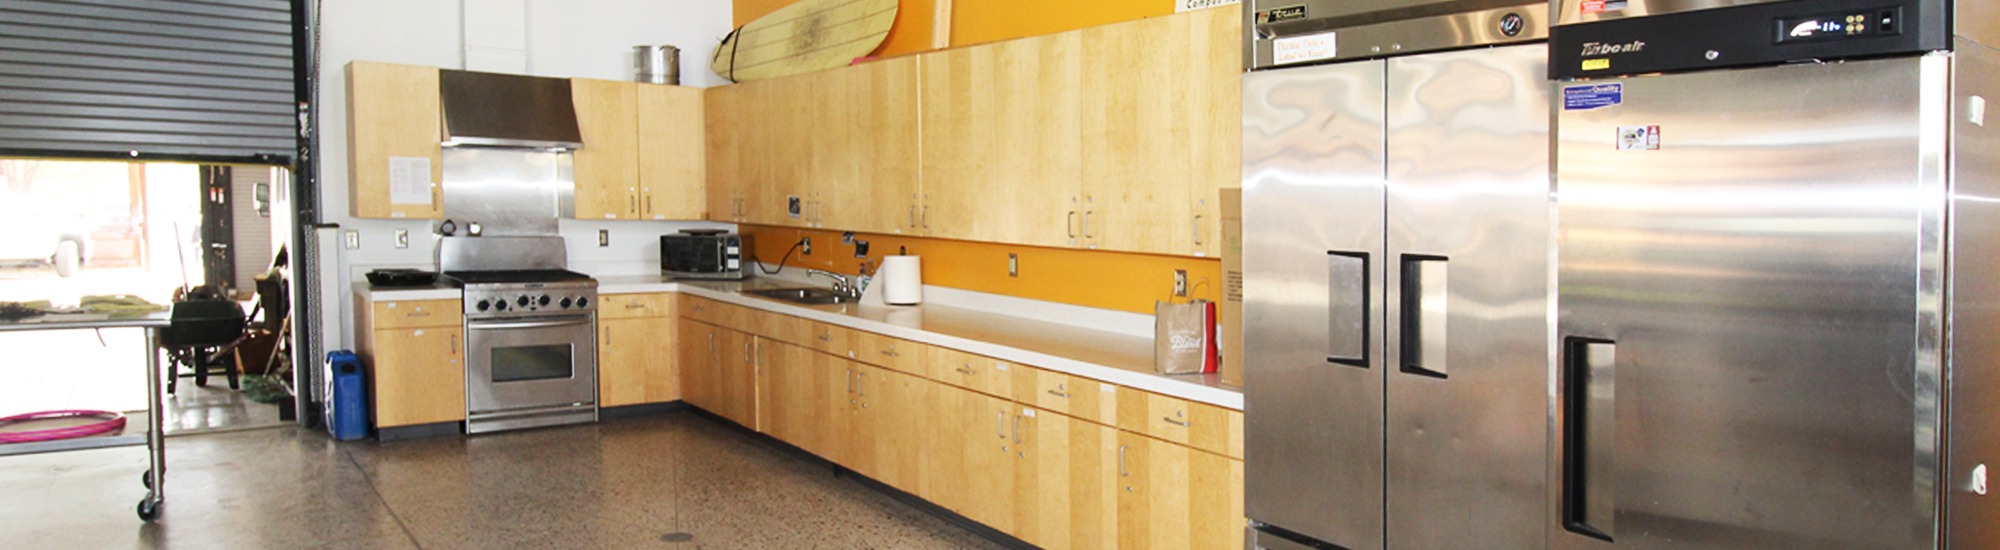 Kitchen featuring counters, stove, fridge, and freezer, at Outdoor Rec UArizona